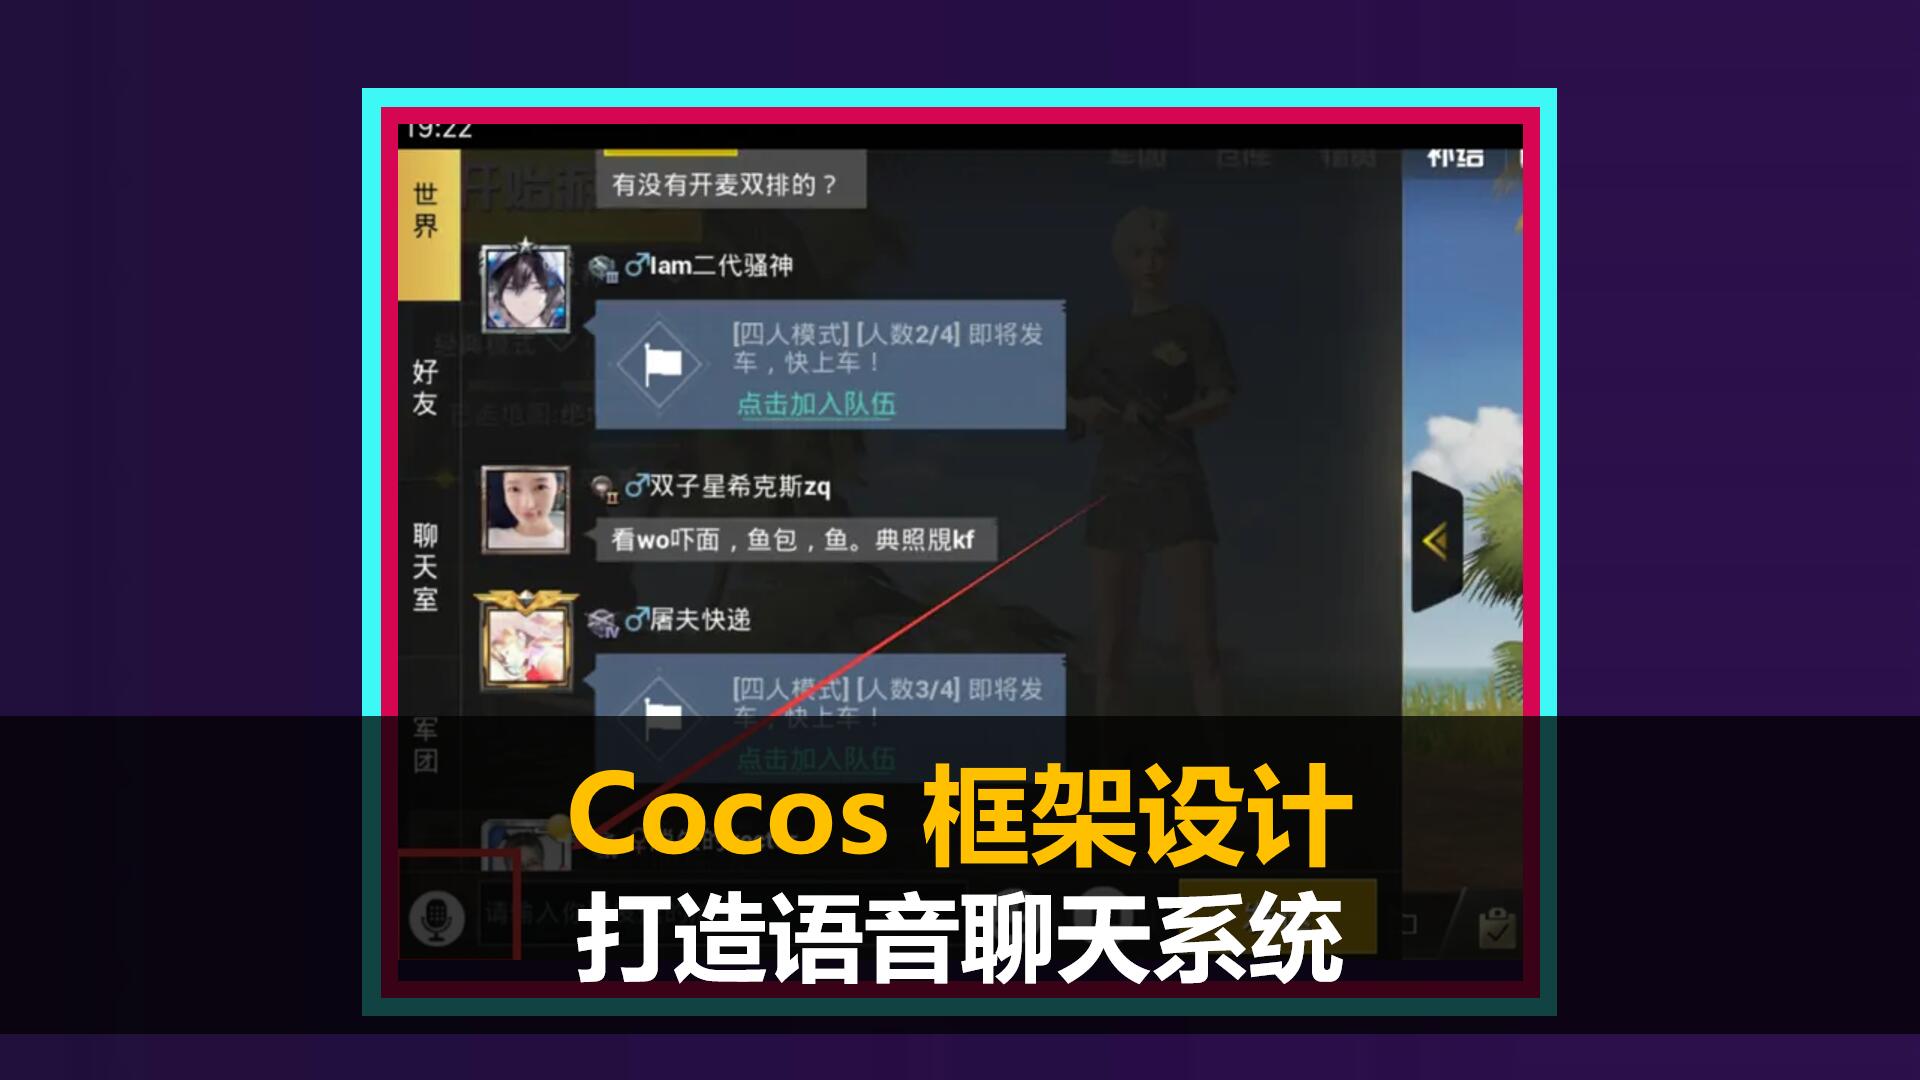 Cocos Creator打造语音聊天系统